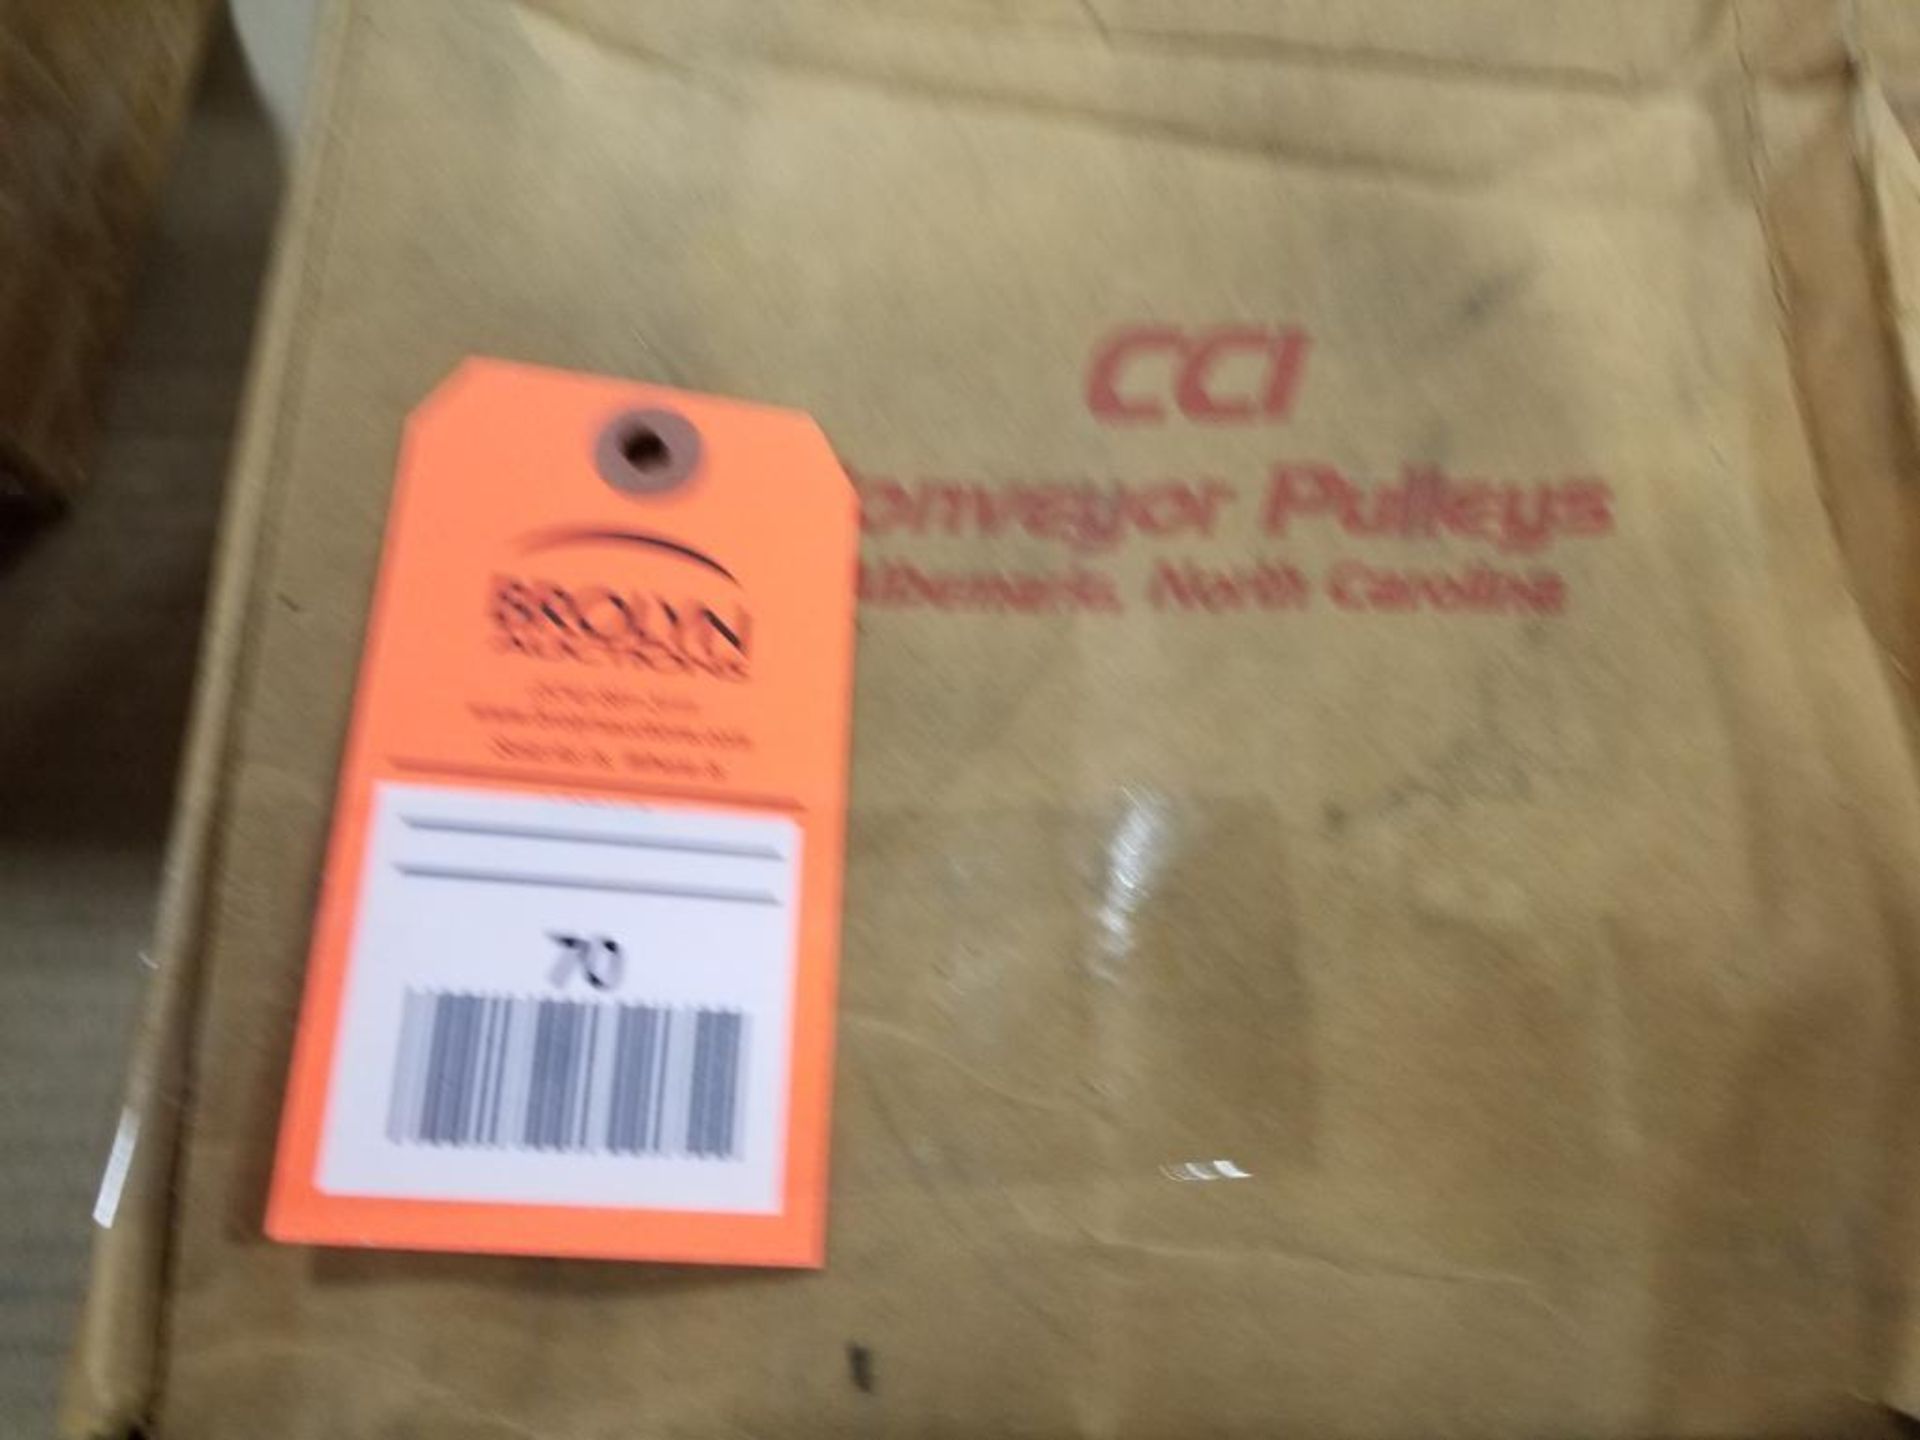 CCI conveyor pulleys D537444 CXTB 45 Steel 2-15/16 IN. New in box.